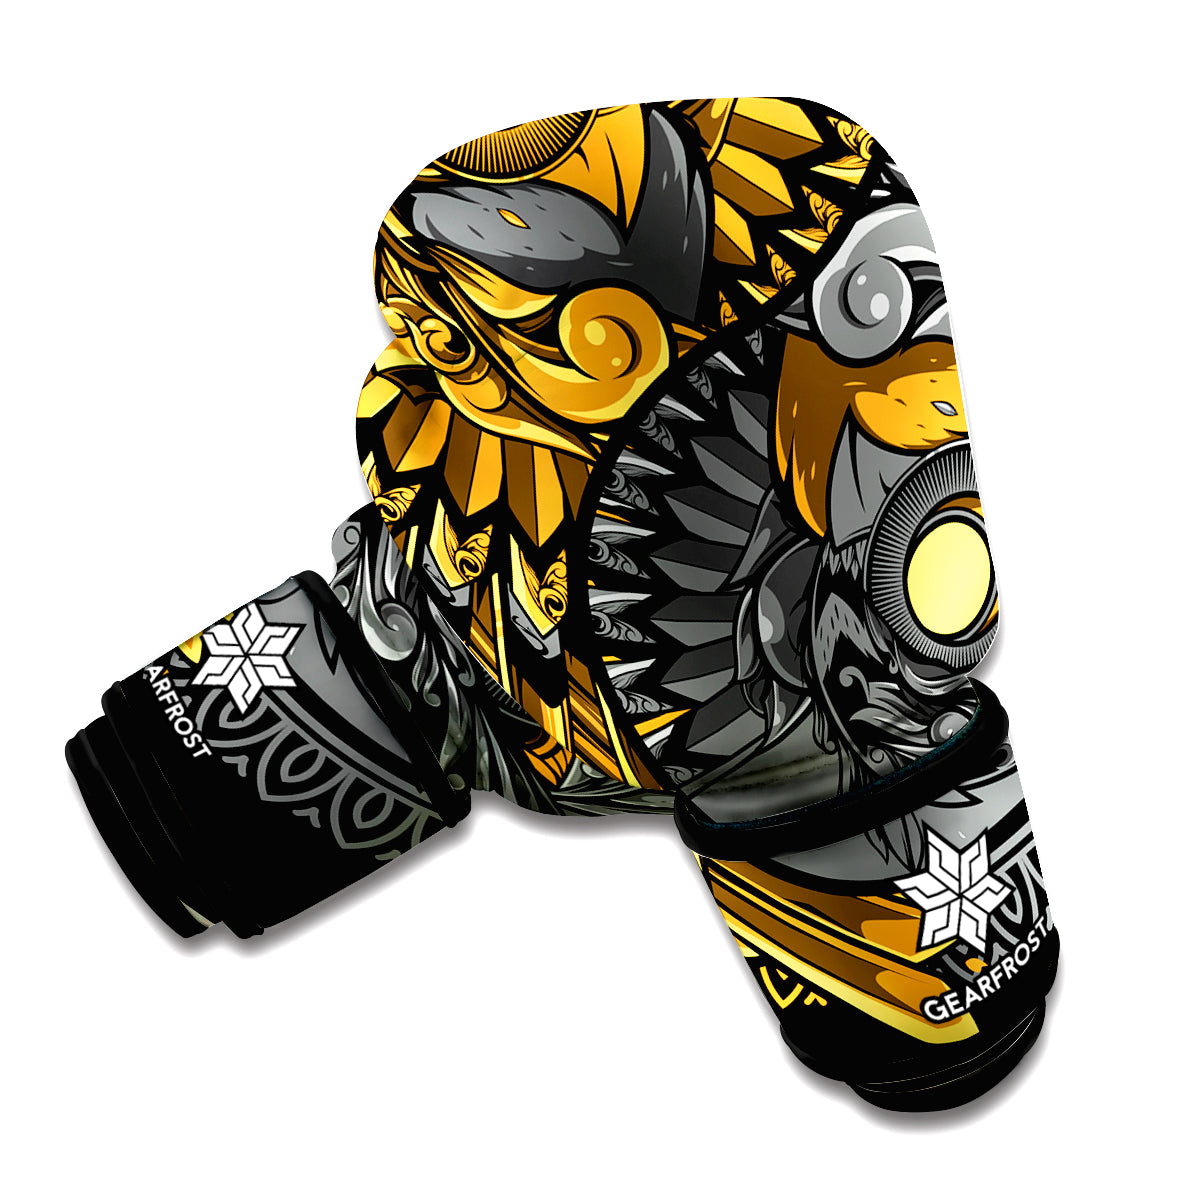 Yin Yang Owl Print Boxing Gloves